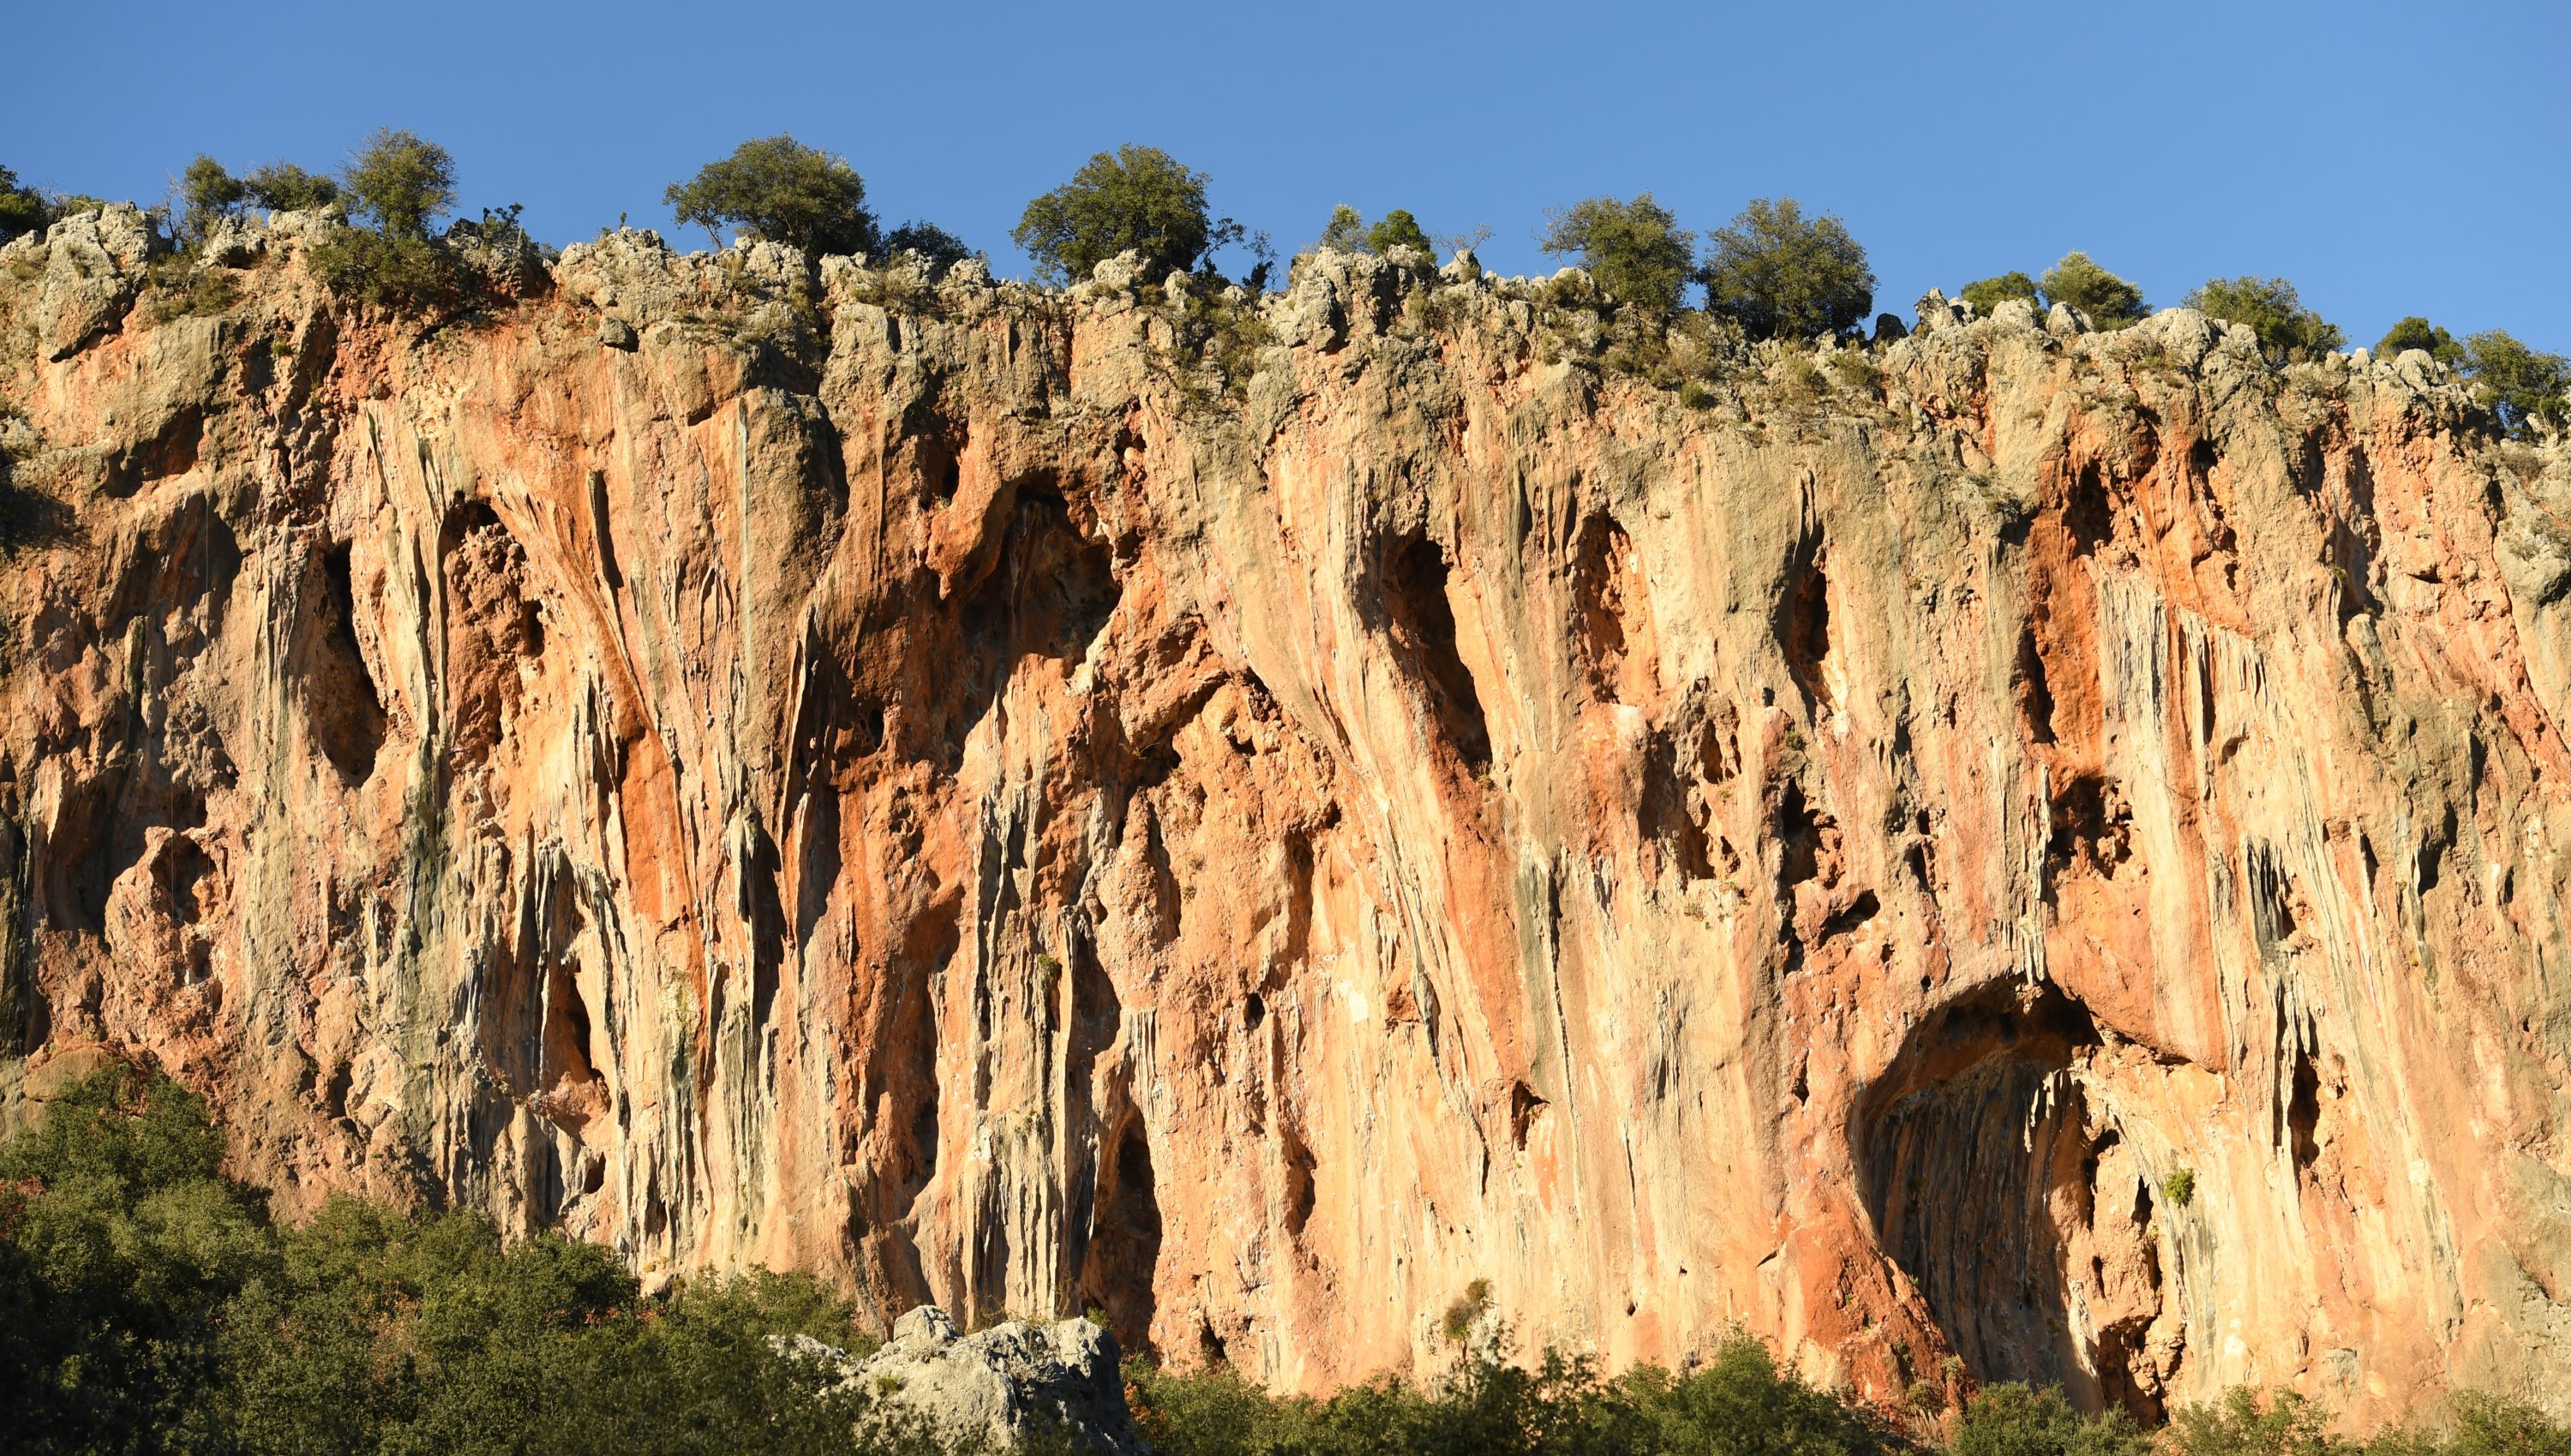  Geyikbayırı is Turkey’s rock climbing haven. (Shutterstock Photo) 